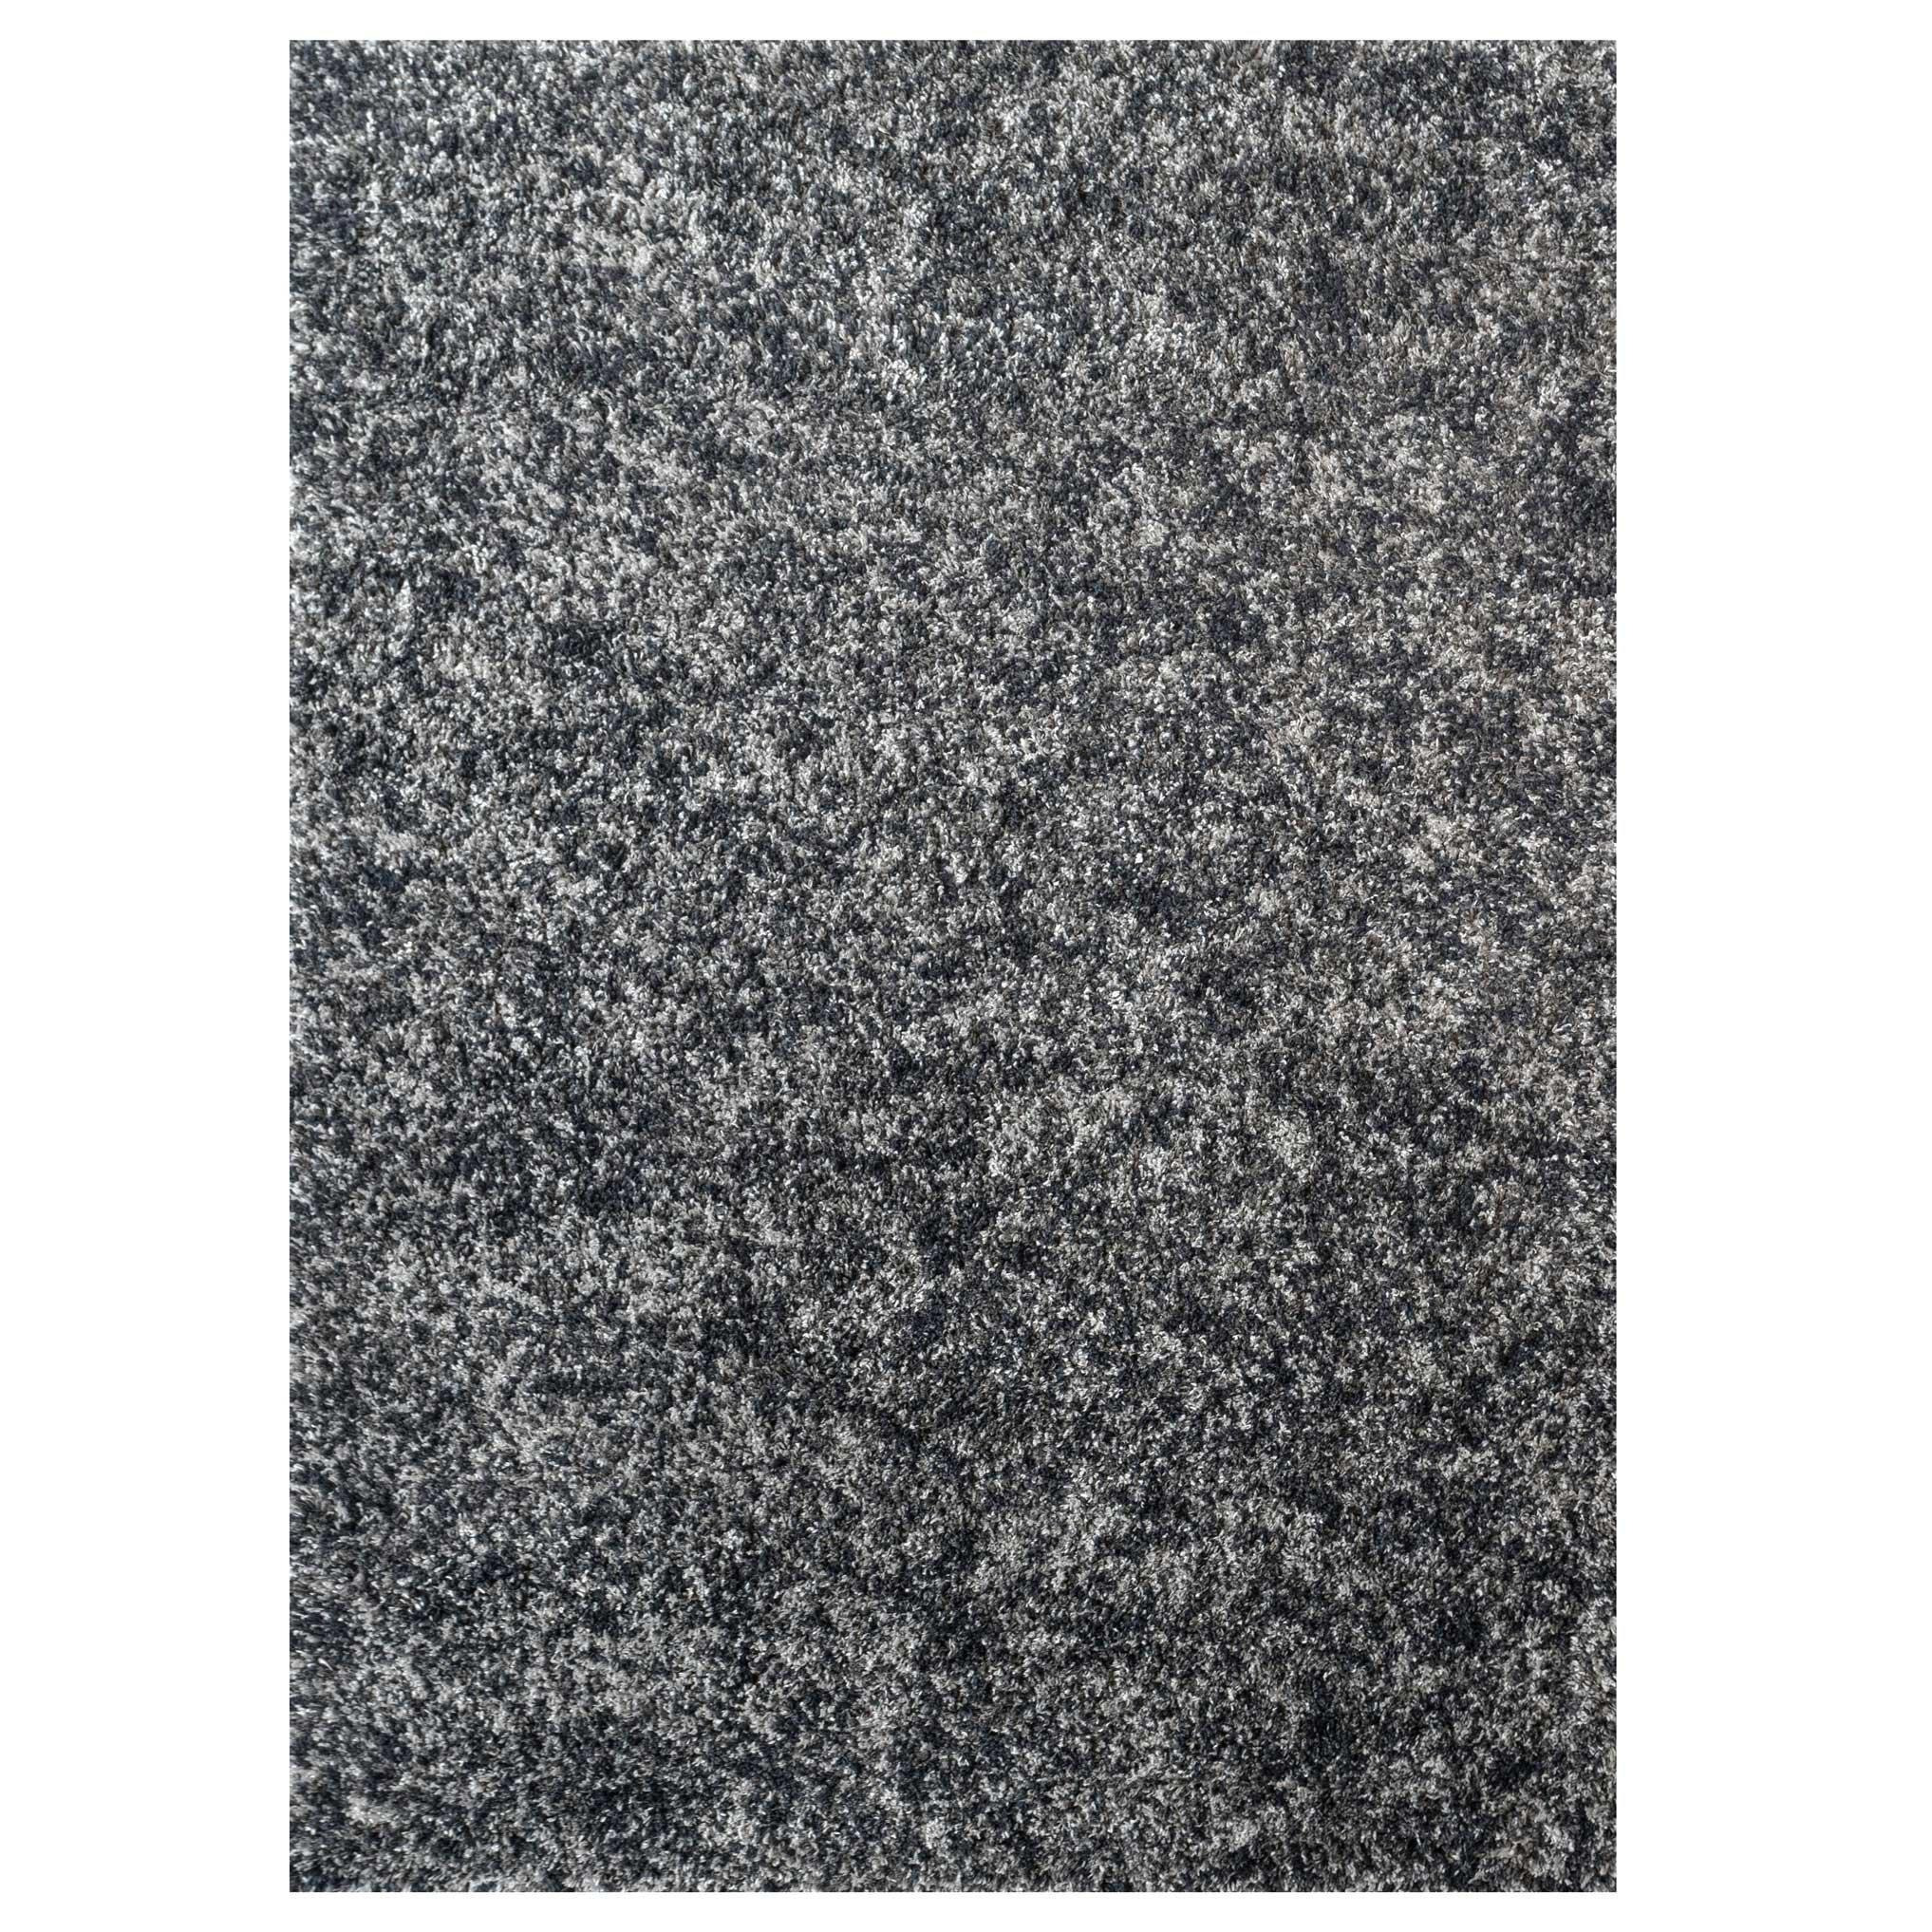 Grey Charcoal Super Soft Shaggy Area Rug - image 1